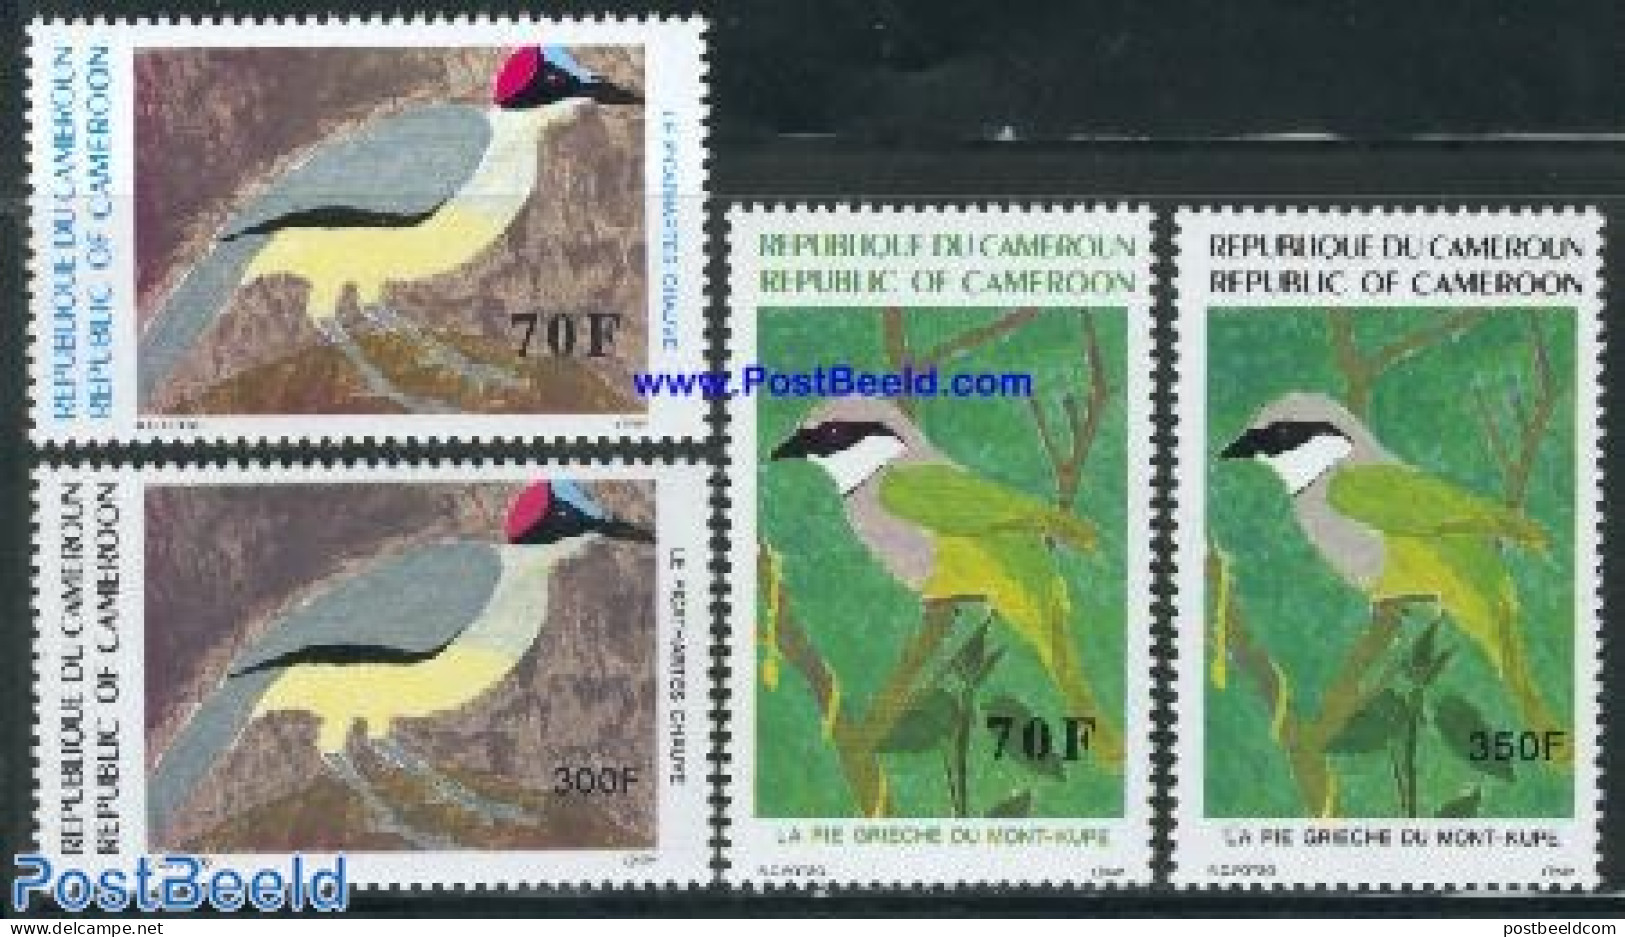 Cameroon 1991 Birds 4v, Mint NH, Nature - Birds - Camerun (1960-...)